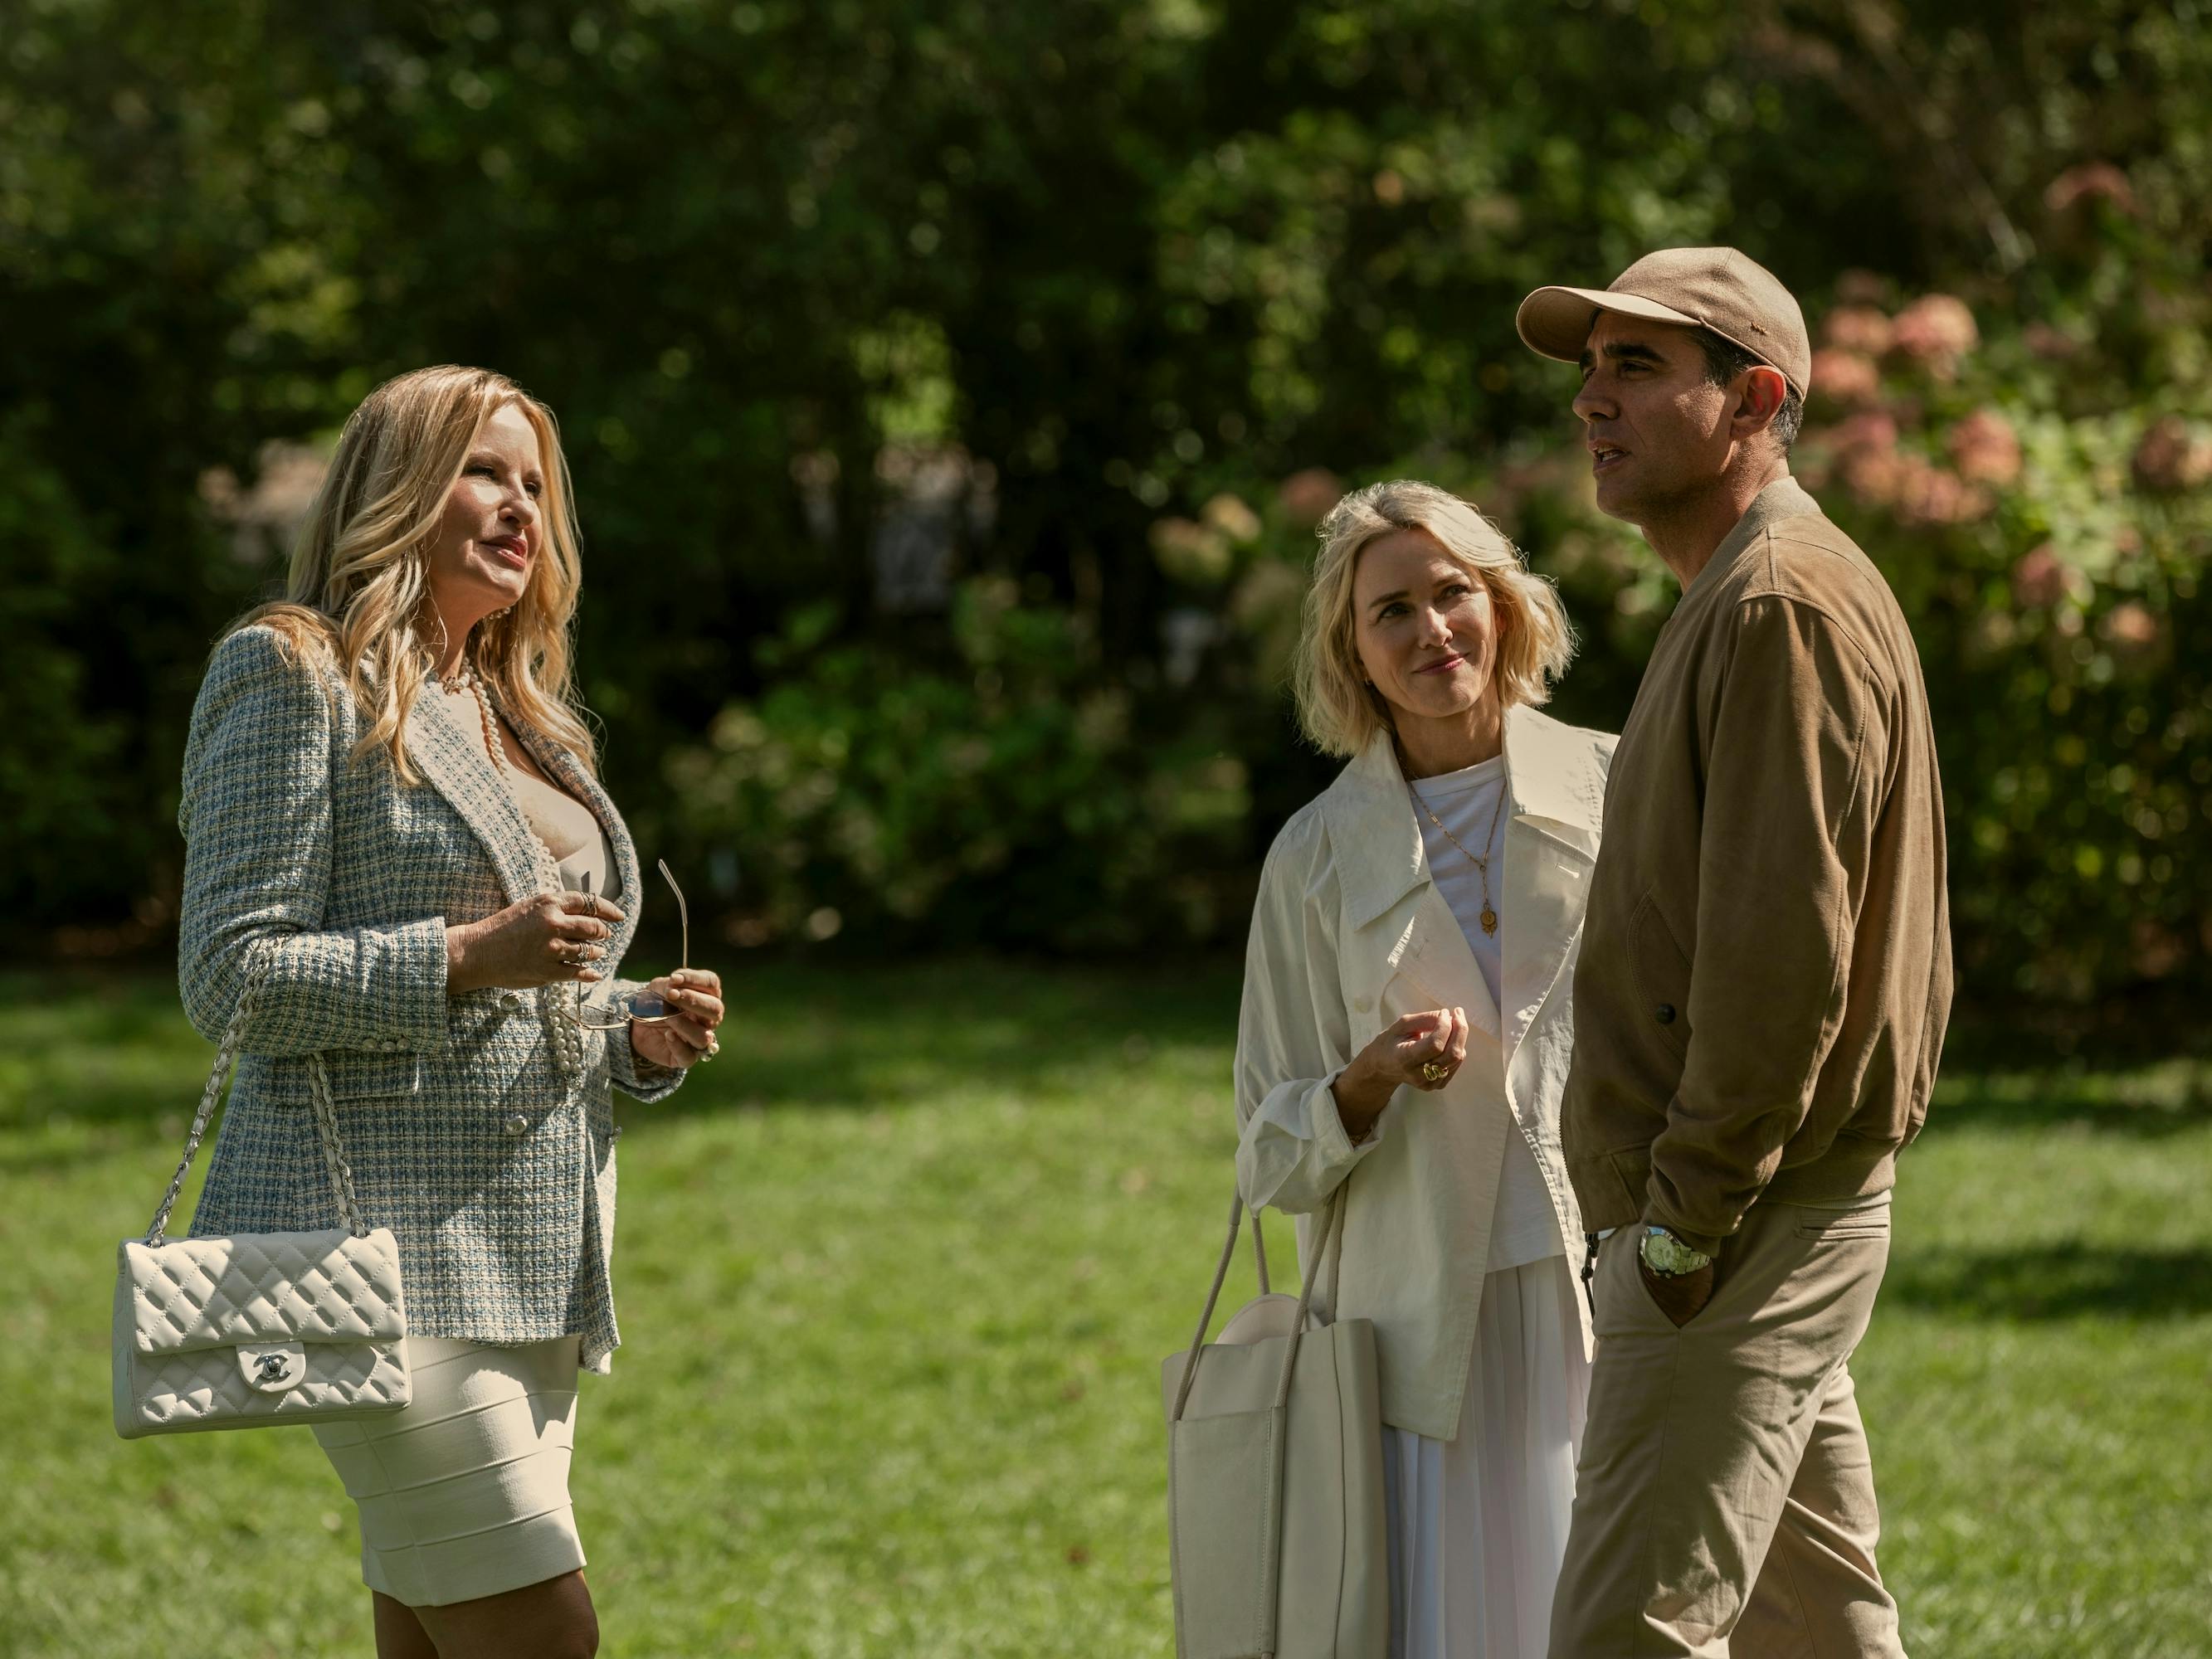 Karen Calhoun (Jennifer Coolidge), Nora Brannock (Naomi Watts), and Dean Brannock (Bobby Cannavale) stand in a bright green lawn.